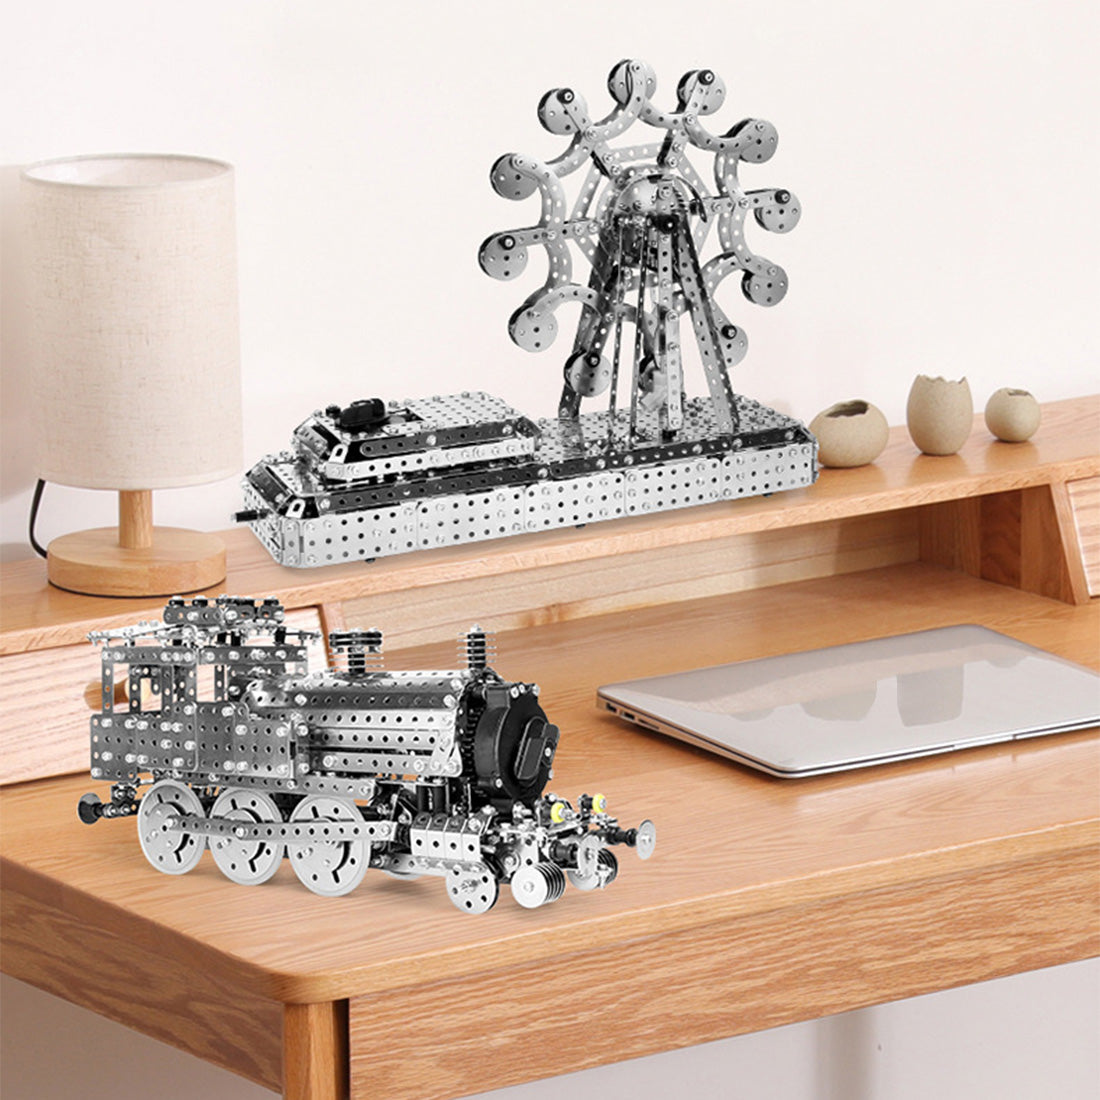 1500PCS+ Metal Clockwork-driven Ferris Wheel DIY Model Toys